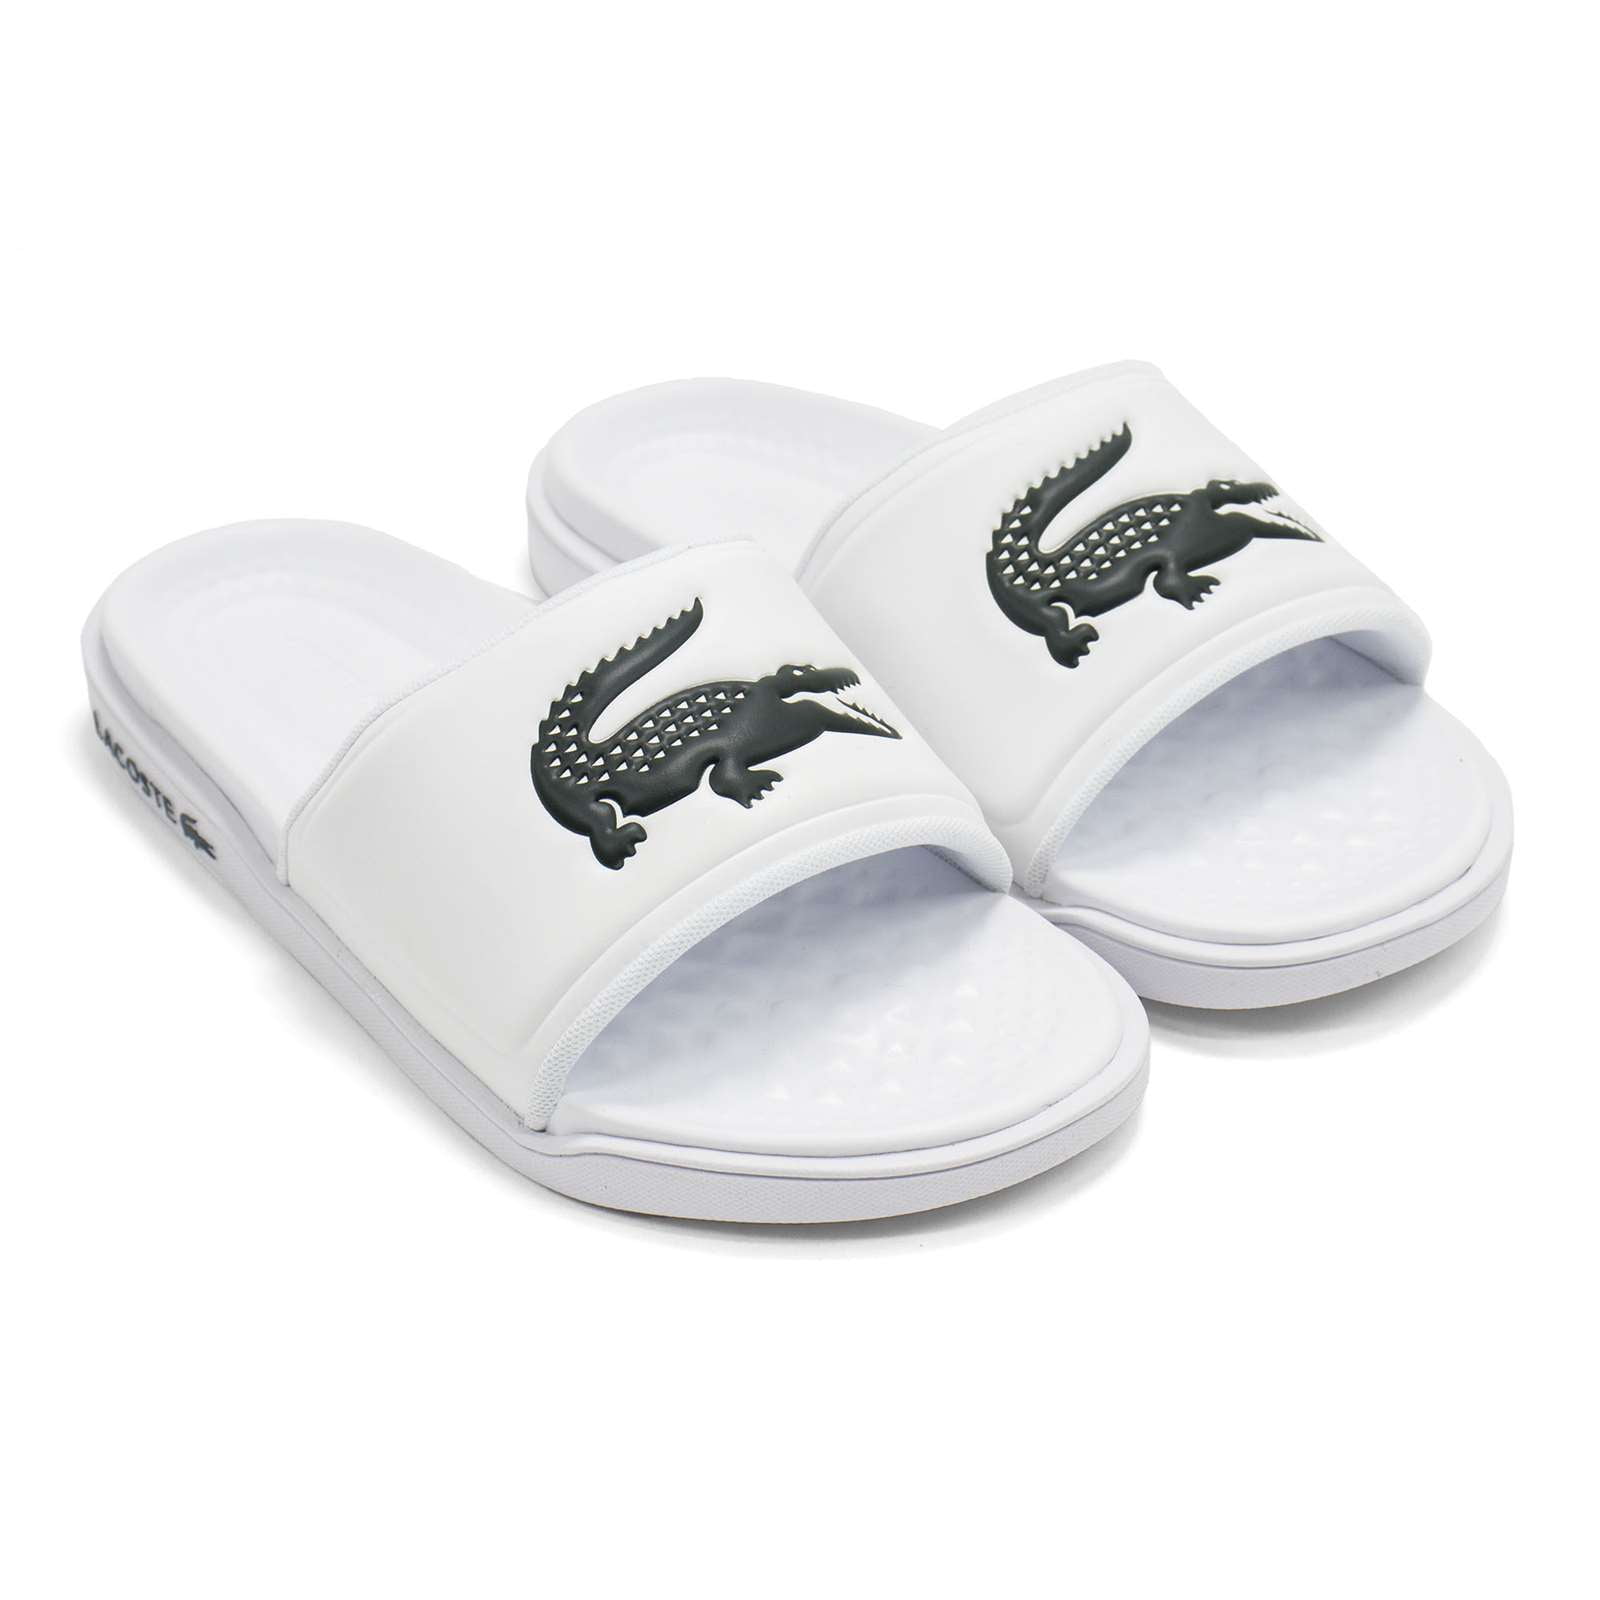 Lacoste Dualiste 0922 1 Slide Sandals, White \ Dark Green,11 M US - Walmart.com